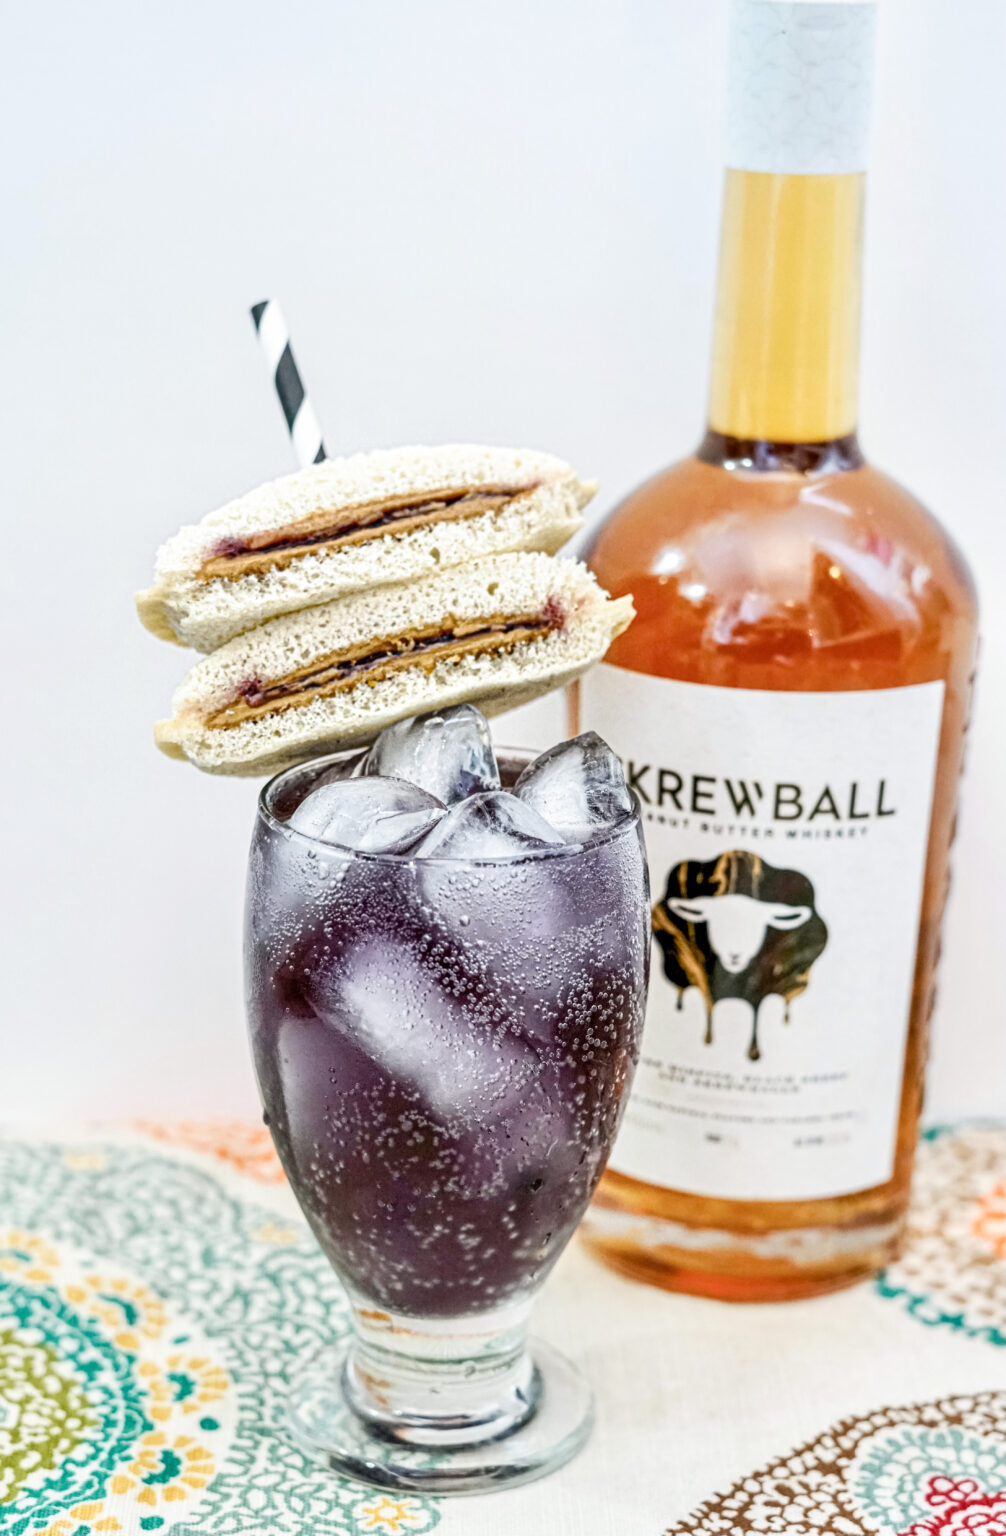 Skrewball Peanut Butter & Jelly Whiskey Cocktail